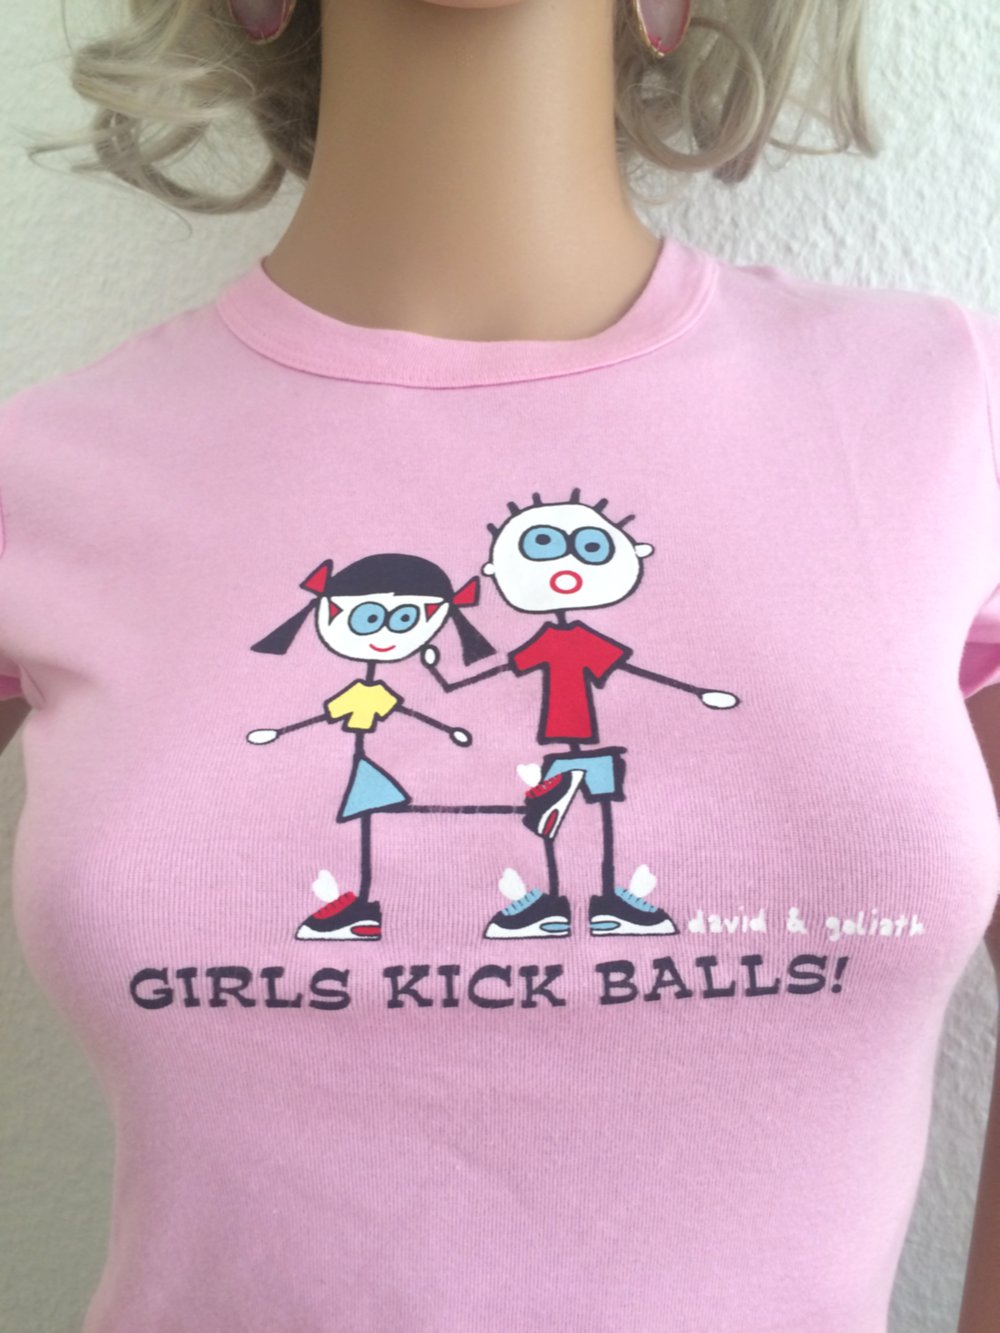 Kick balls girls Disturbing moment